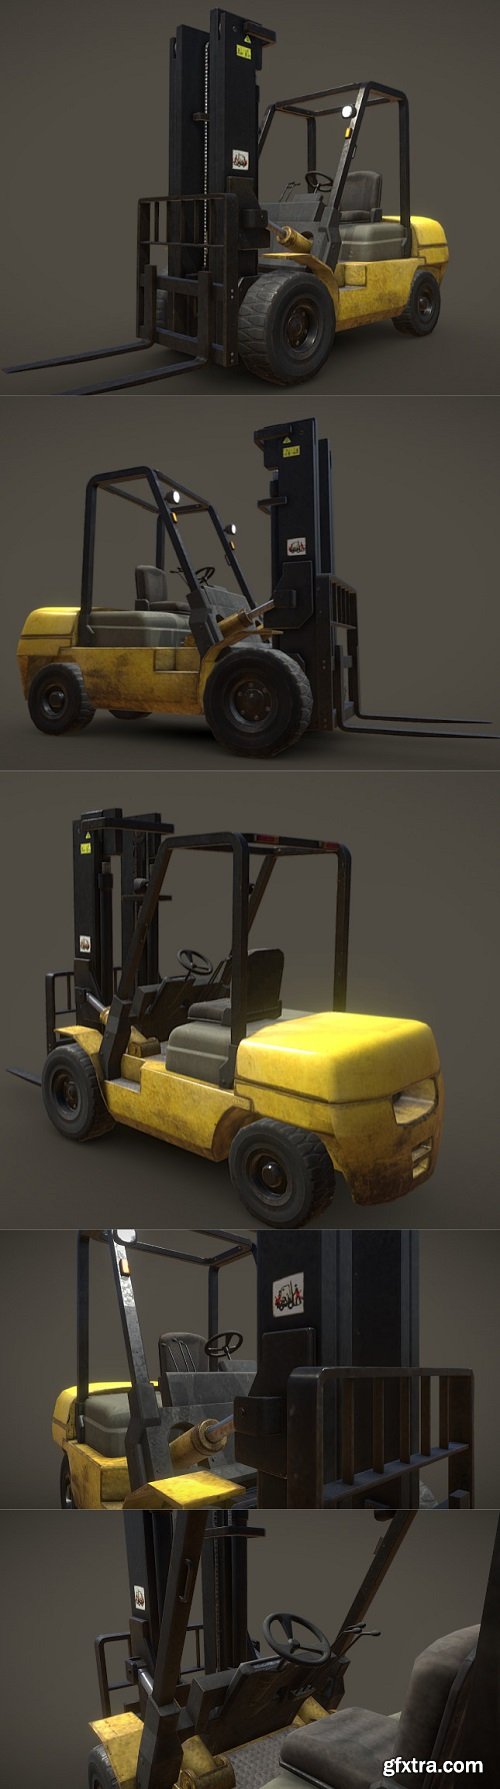 Forklift Truck - Low Poly 3D Model